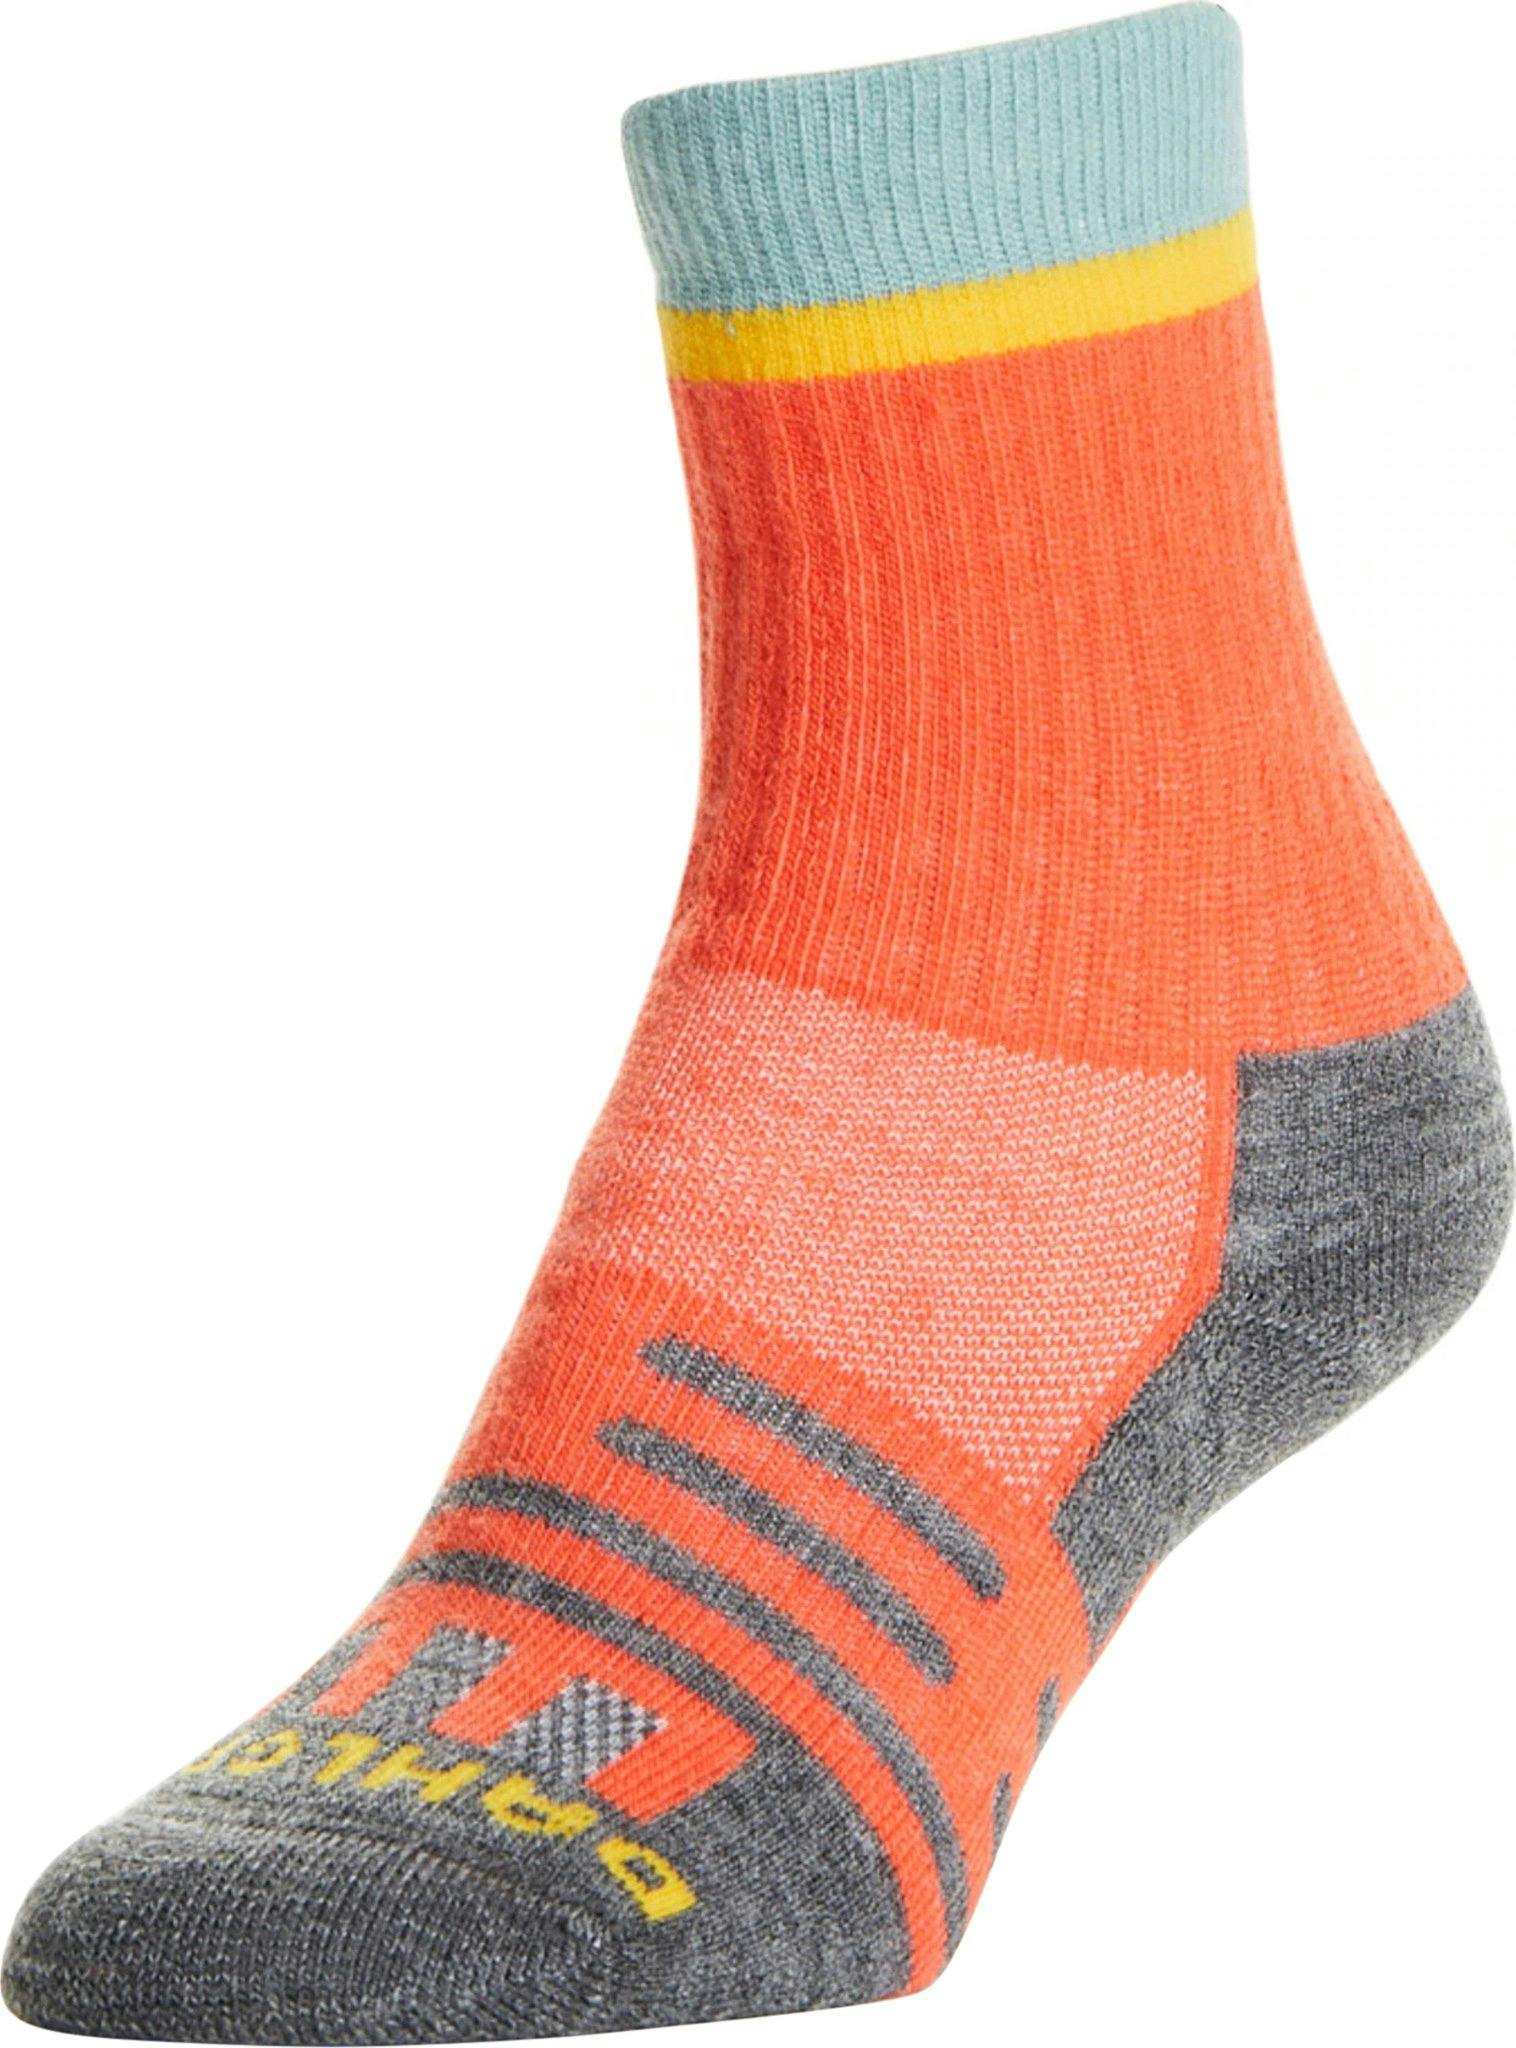 Product image for Play Merino Sock - Kids